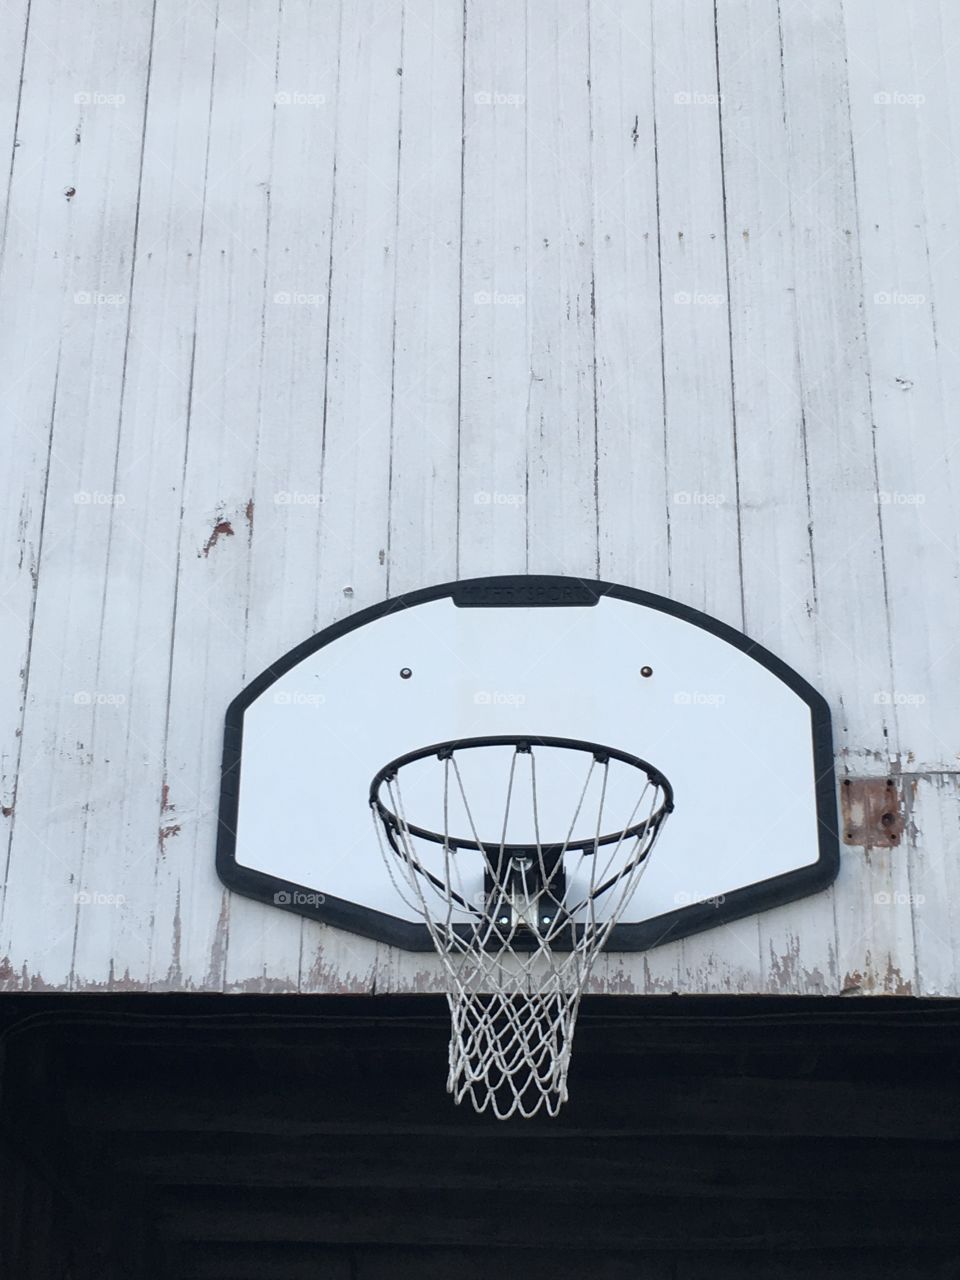 Basketball hoop on the barn